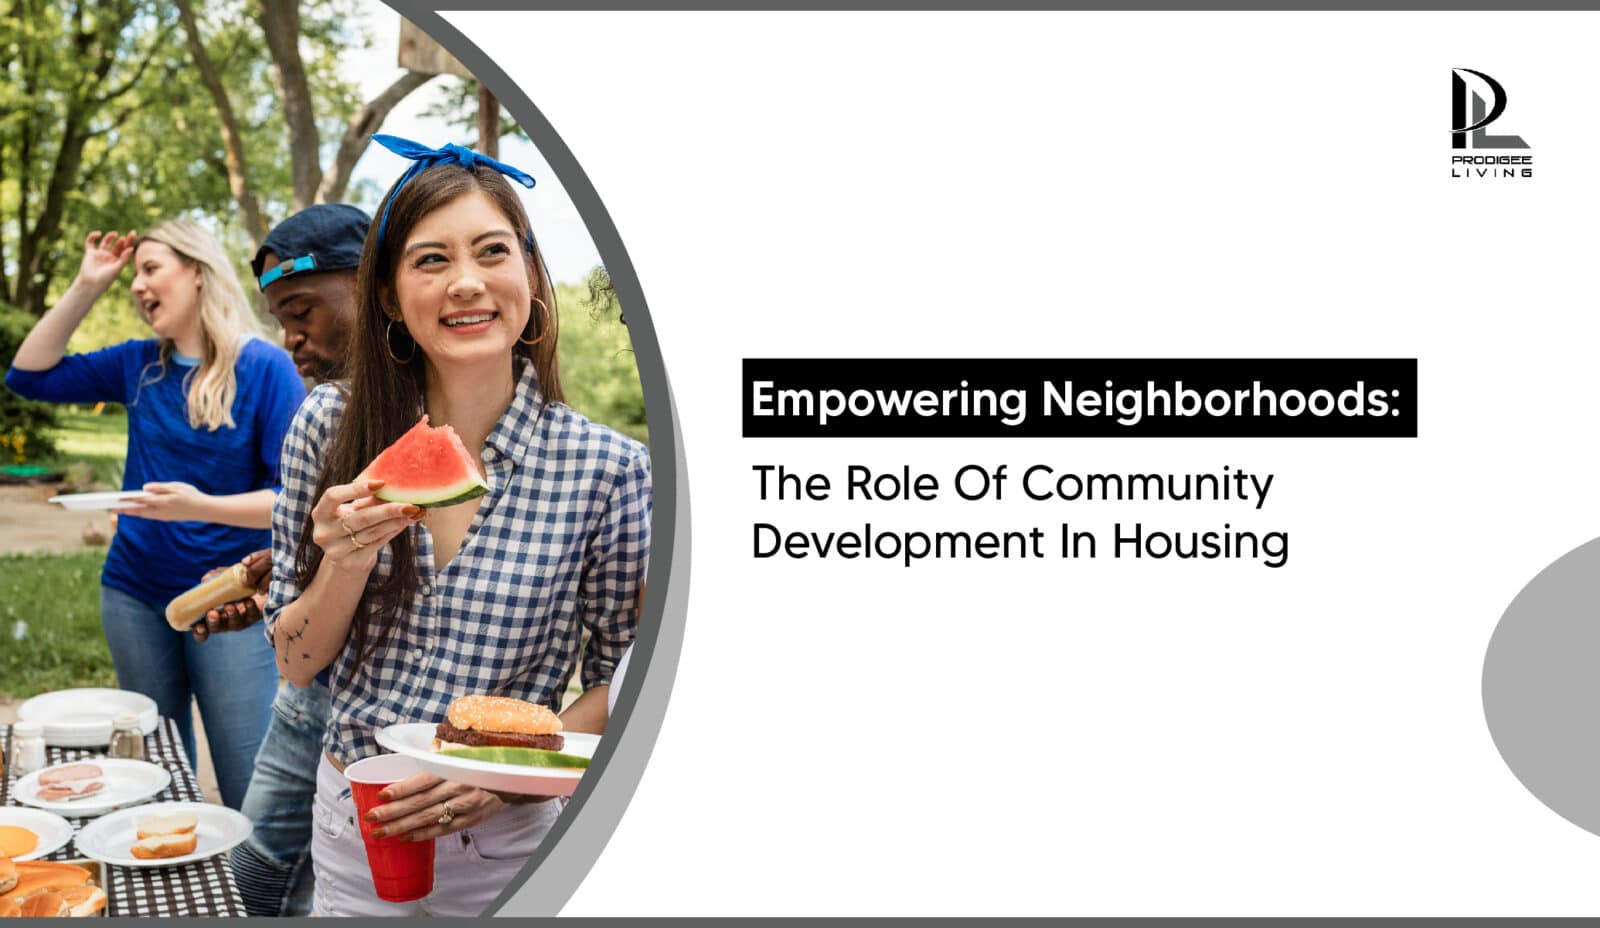 Community Development in Housing